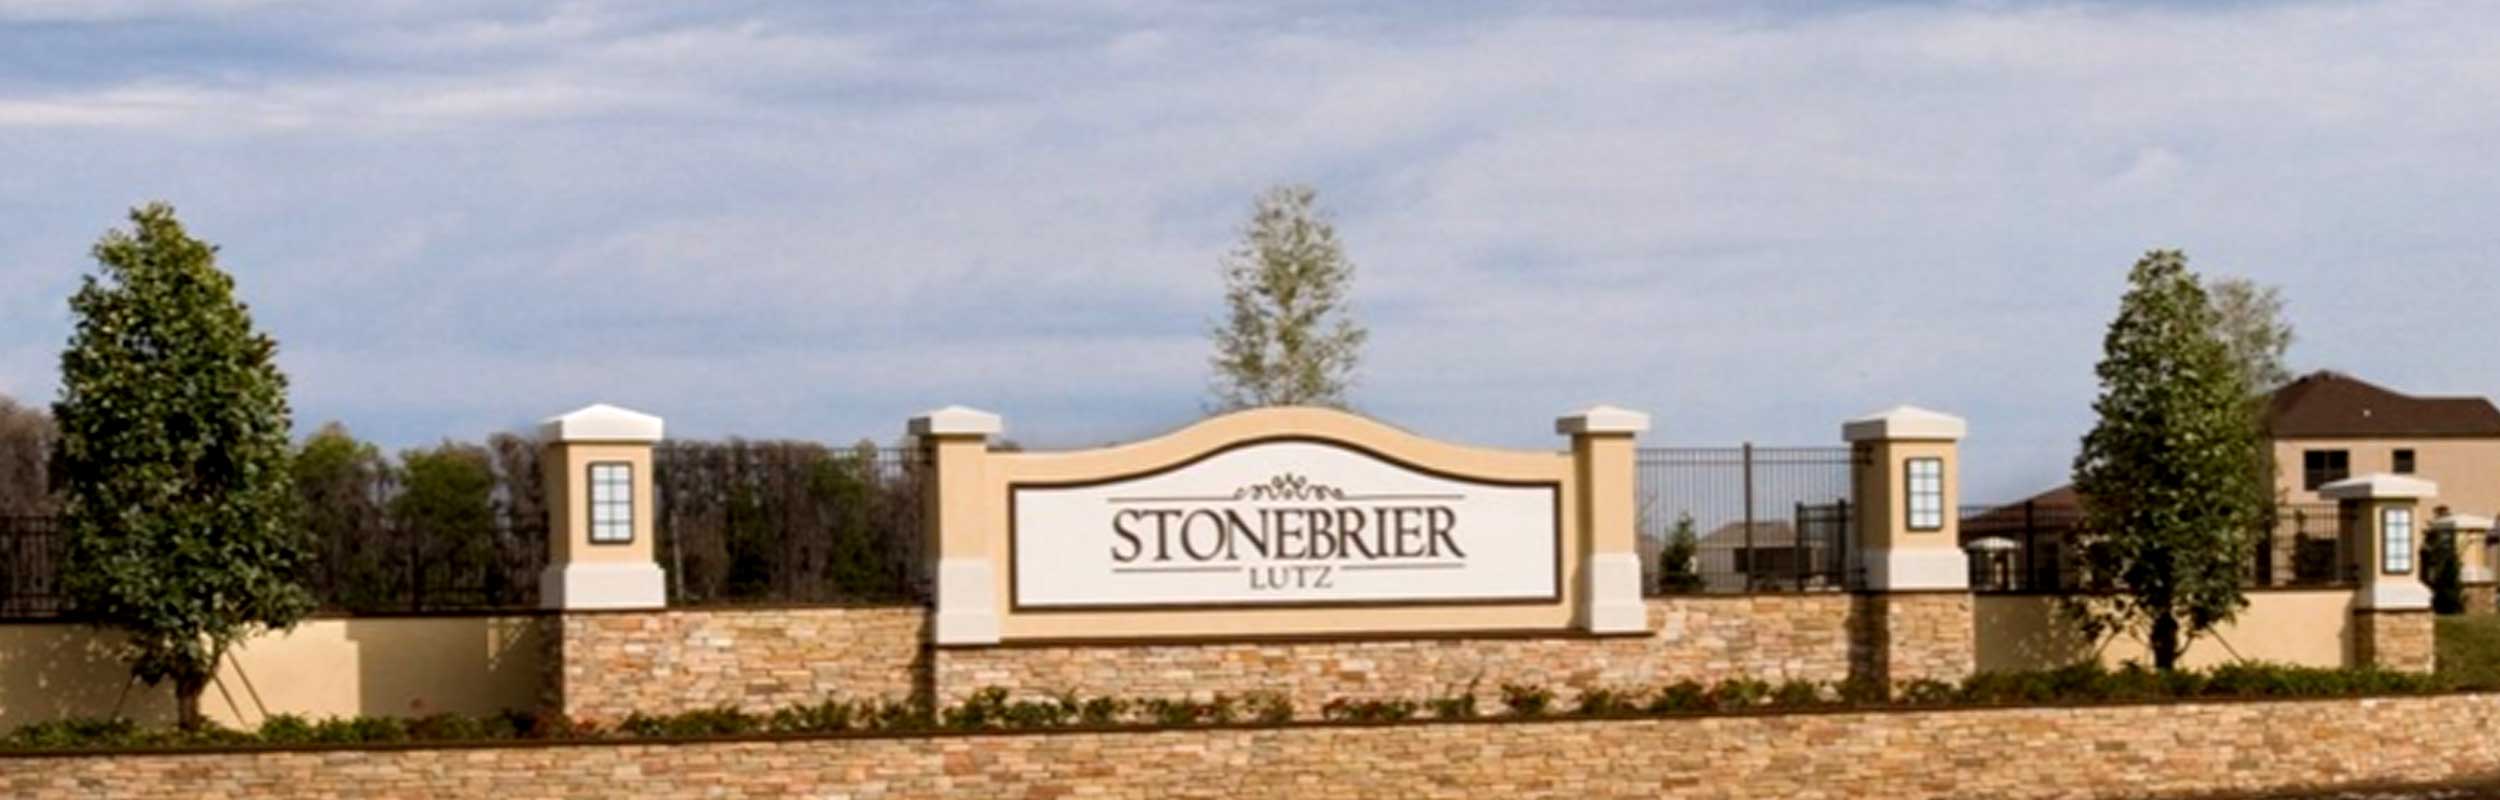 stonebrier-banner